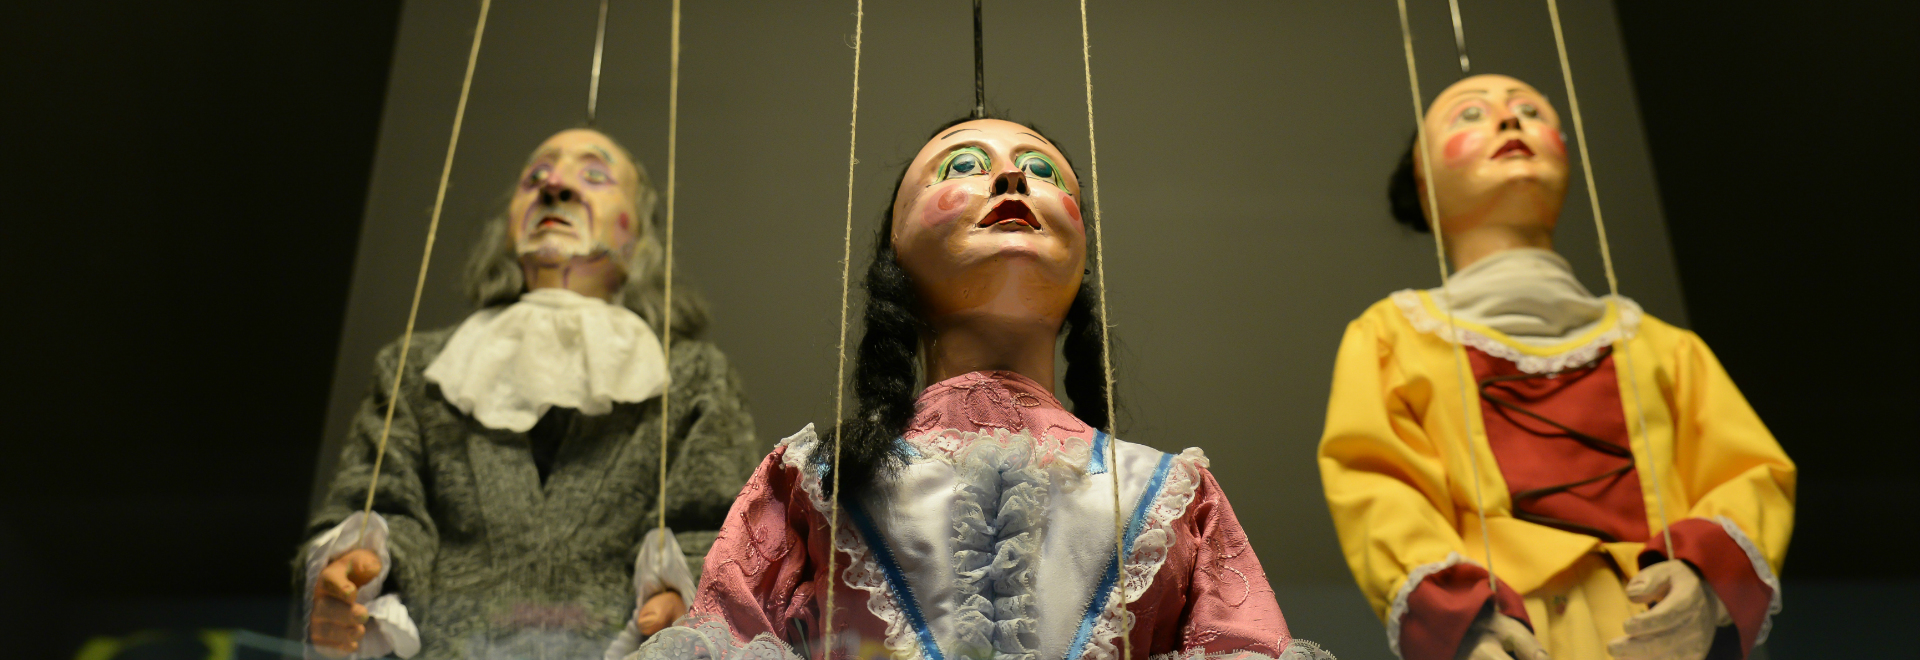 z - Museu da Marioneta